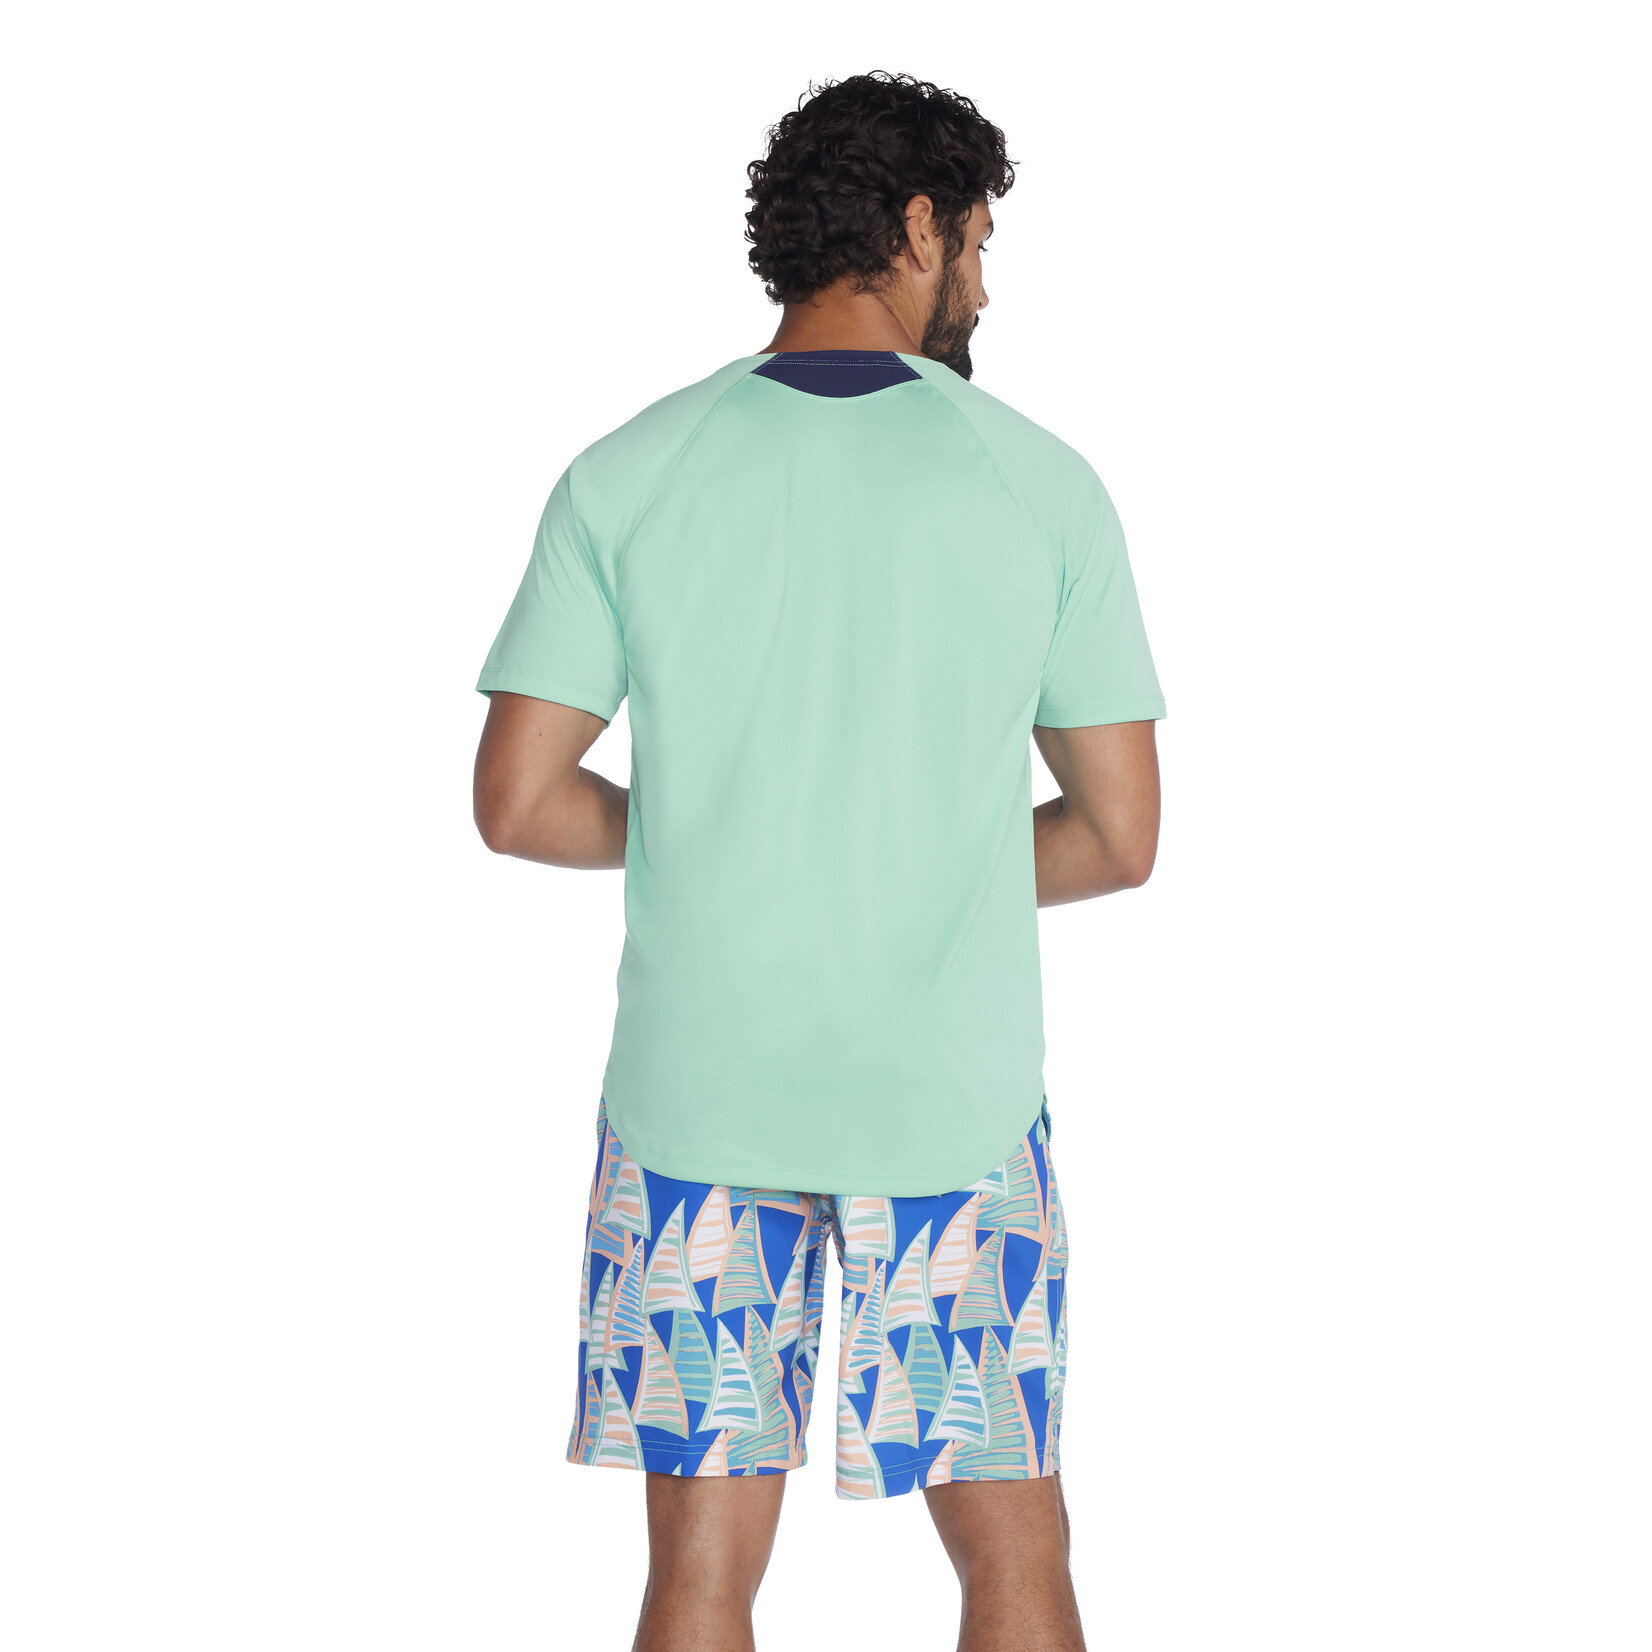 Baybreeze S/S Swim Shirt